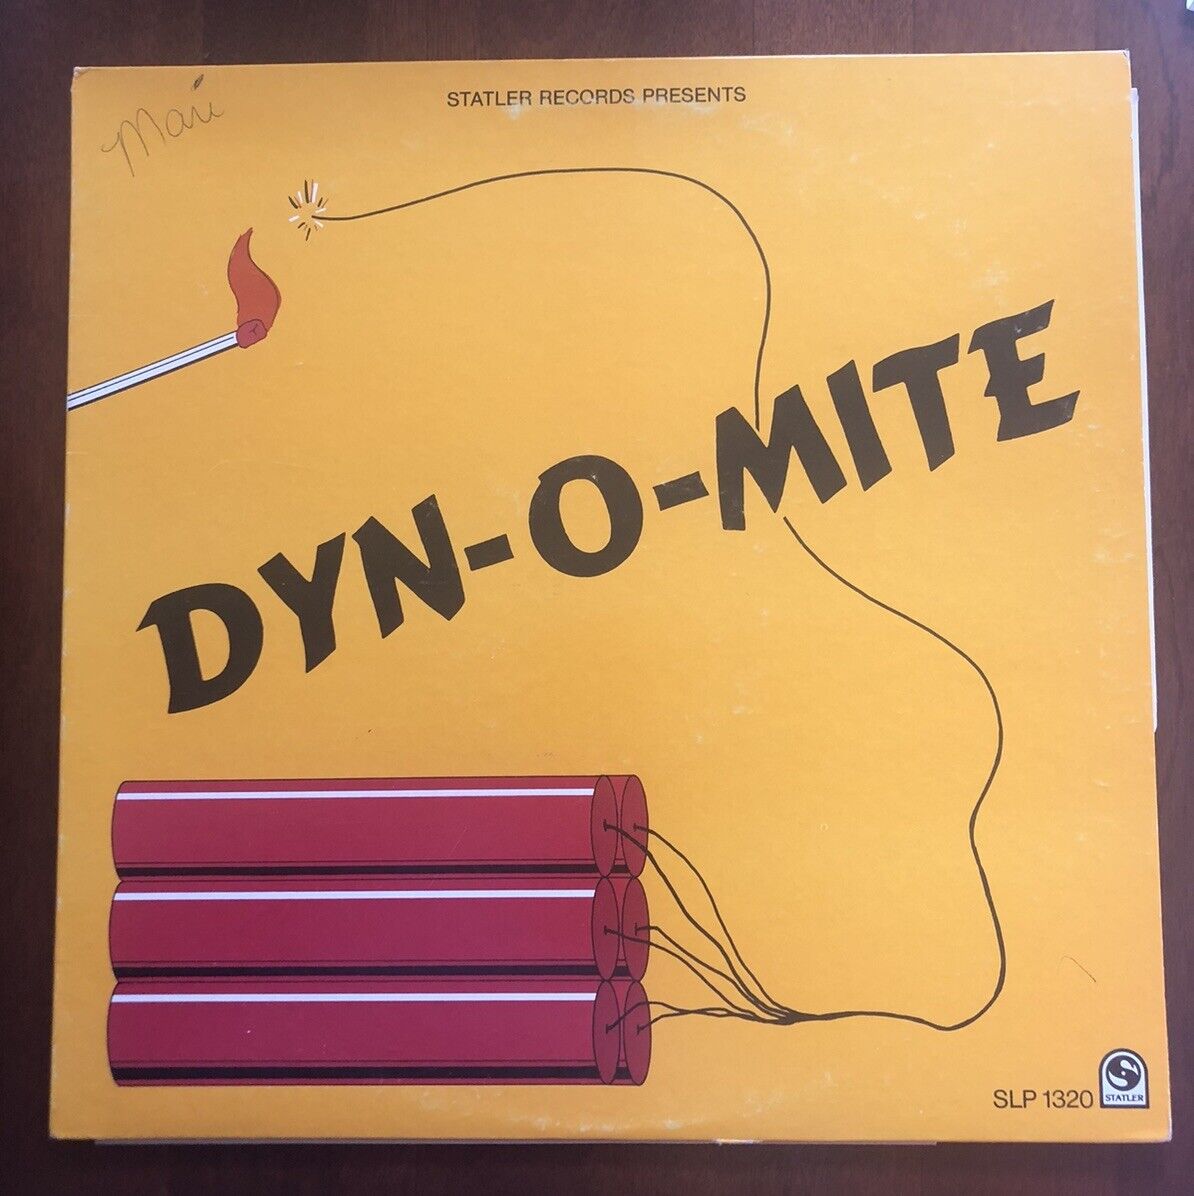 Statler Dyn-O-Mite LP  Jazz Dance Rock “Dirty White Boy” Cover Charming Private